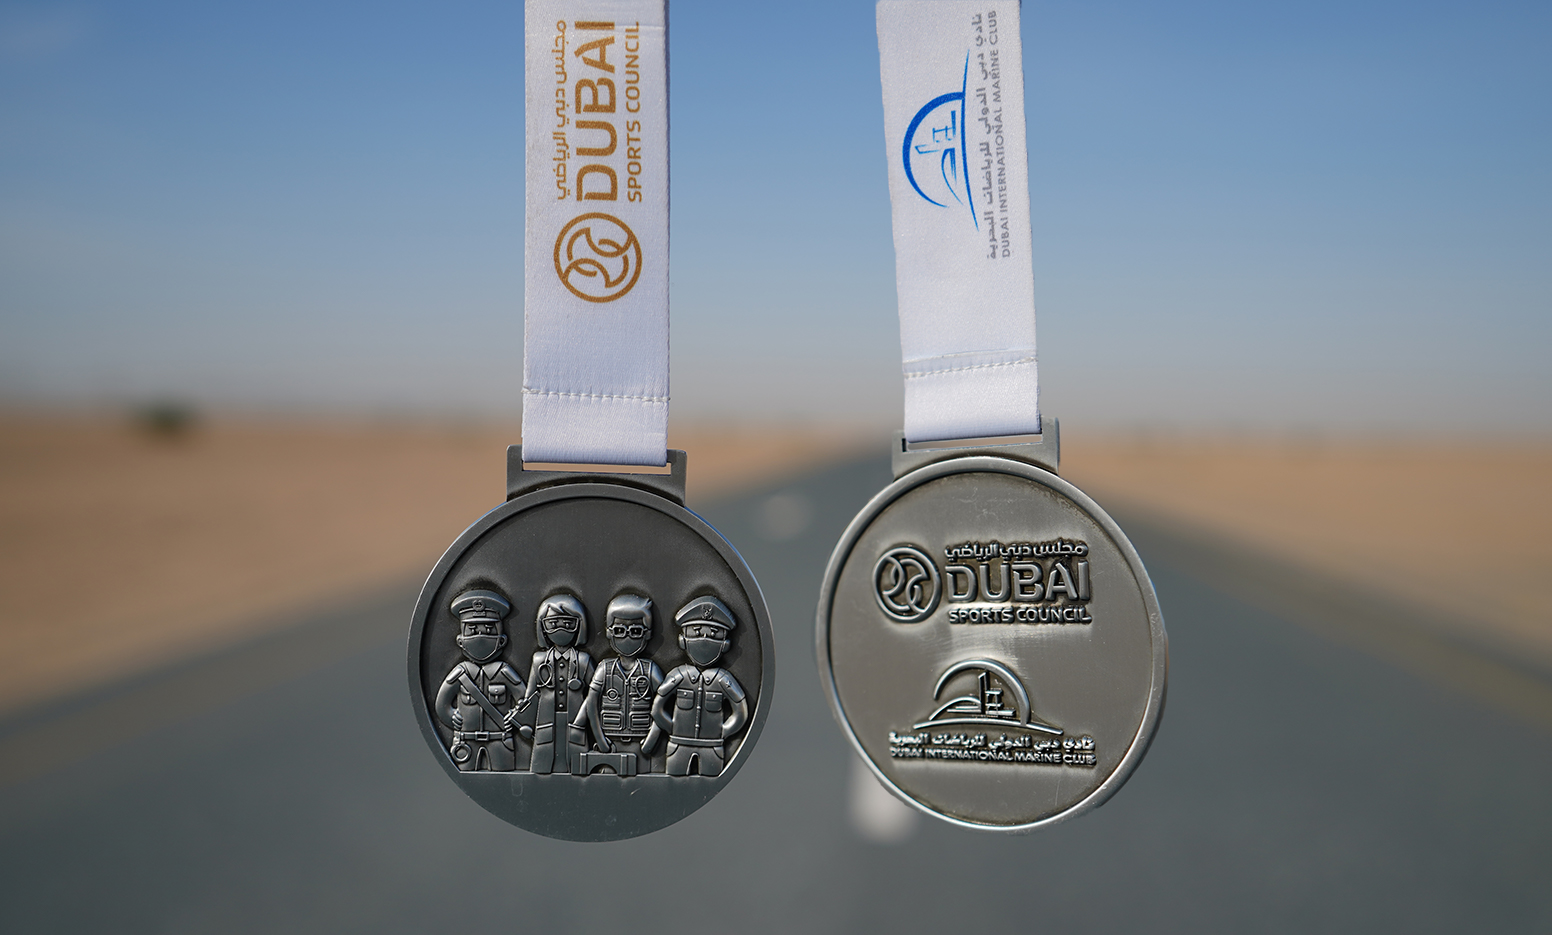 Dubai Sports Council to celebrate Dubai’s COVID-19 heroes through commemorative medals